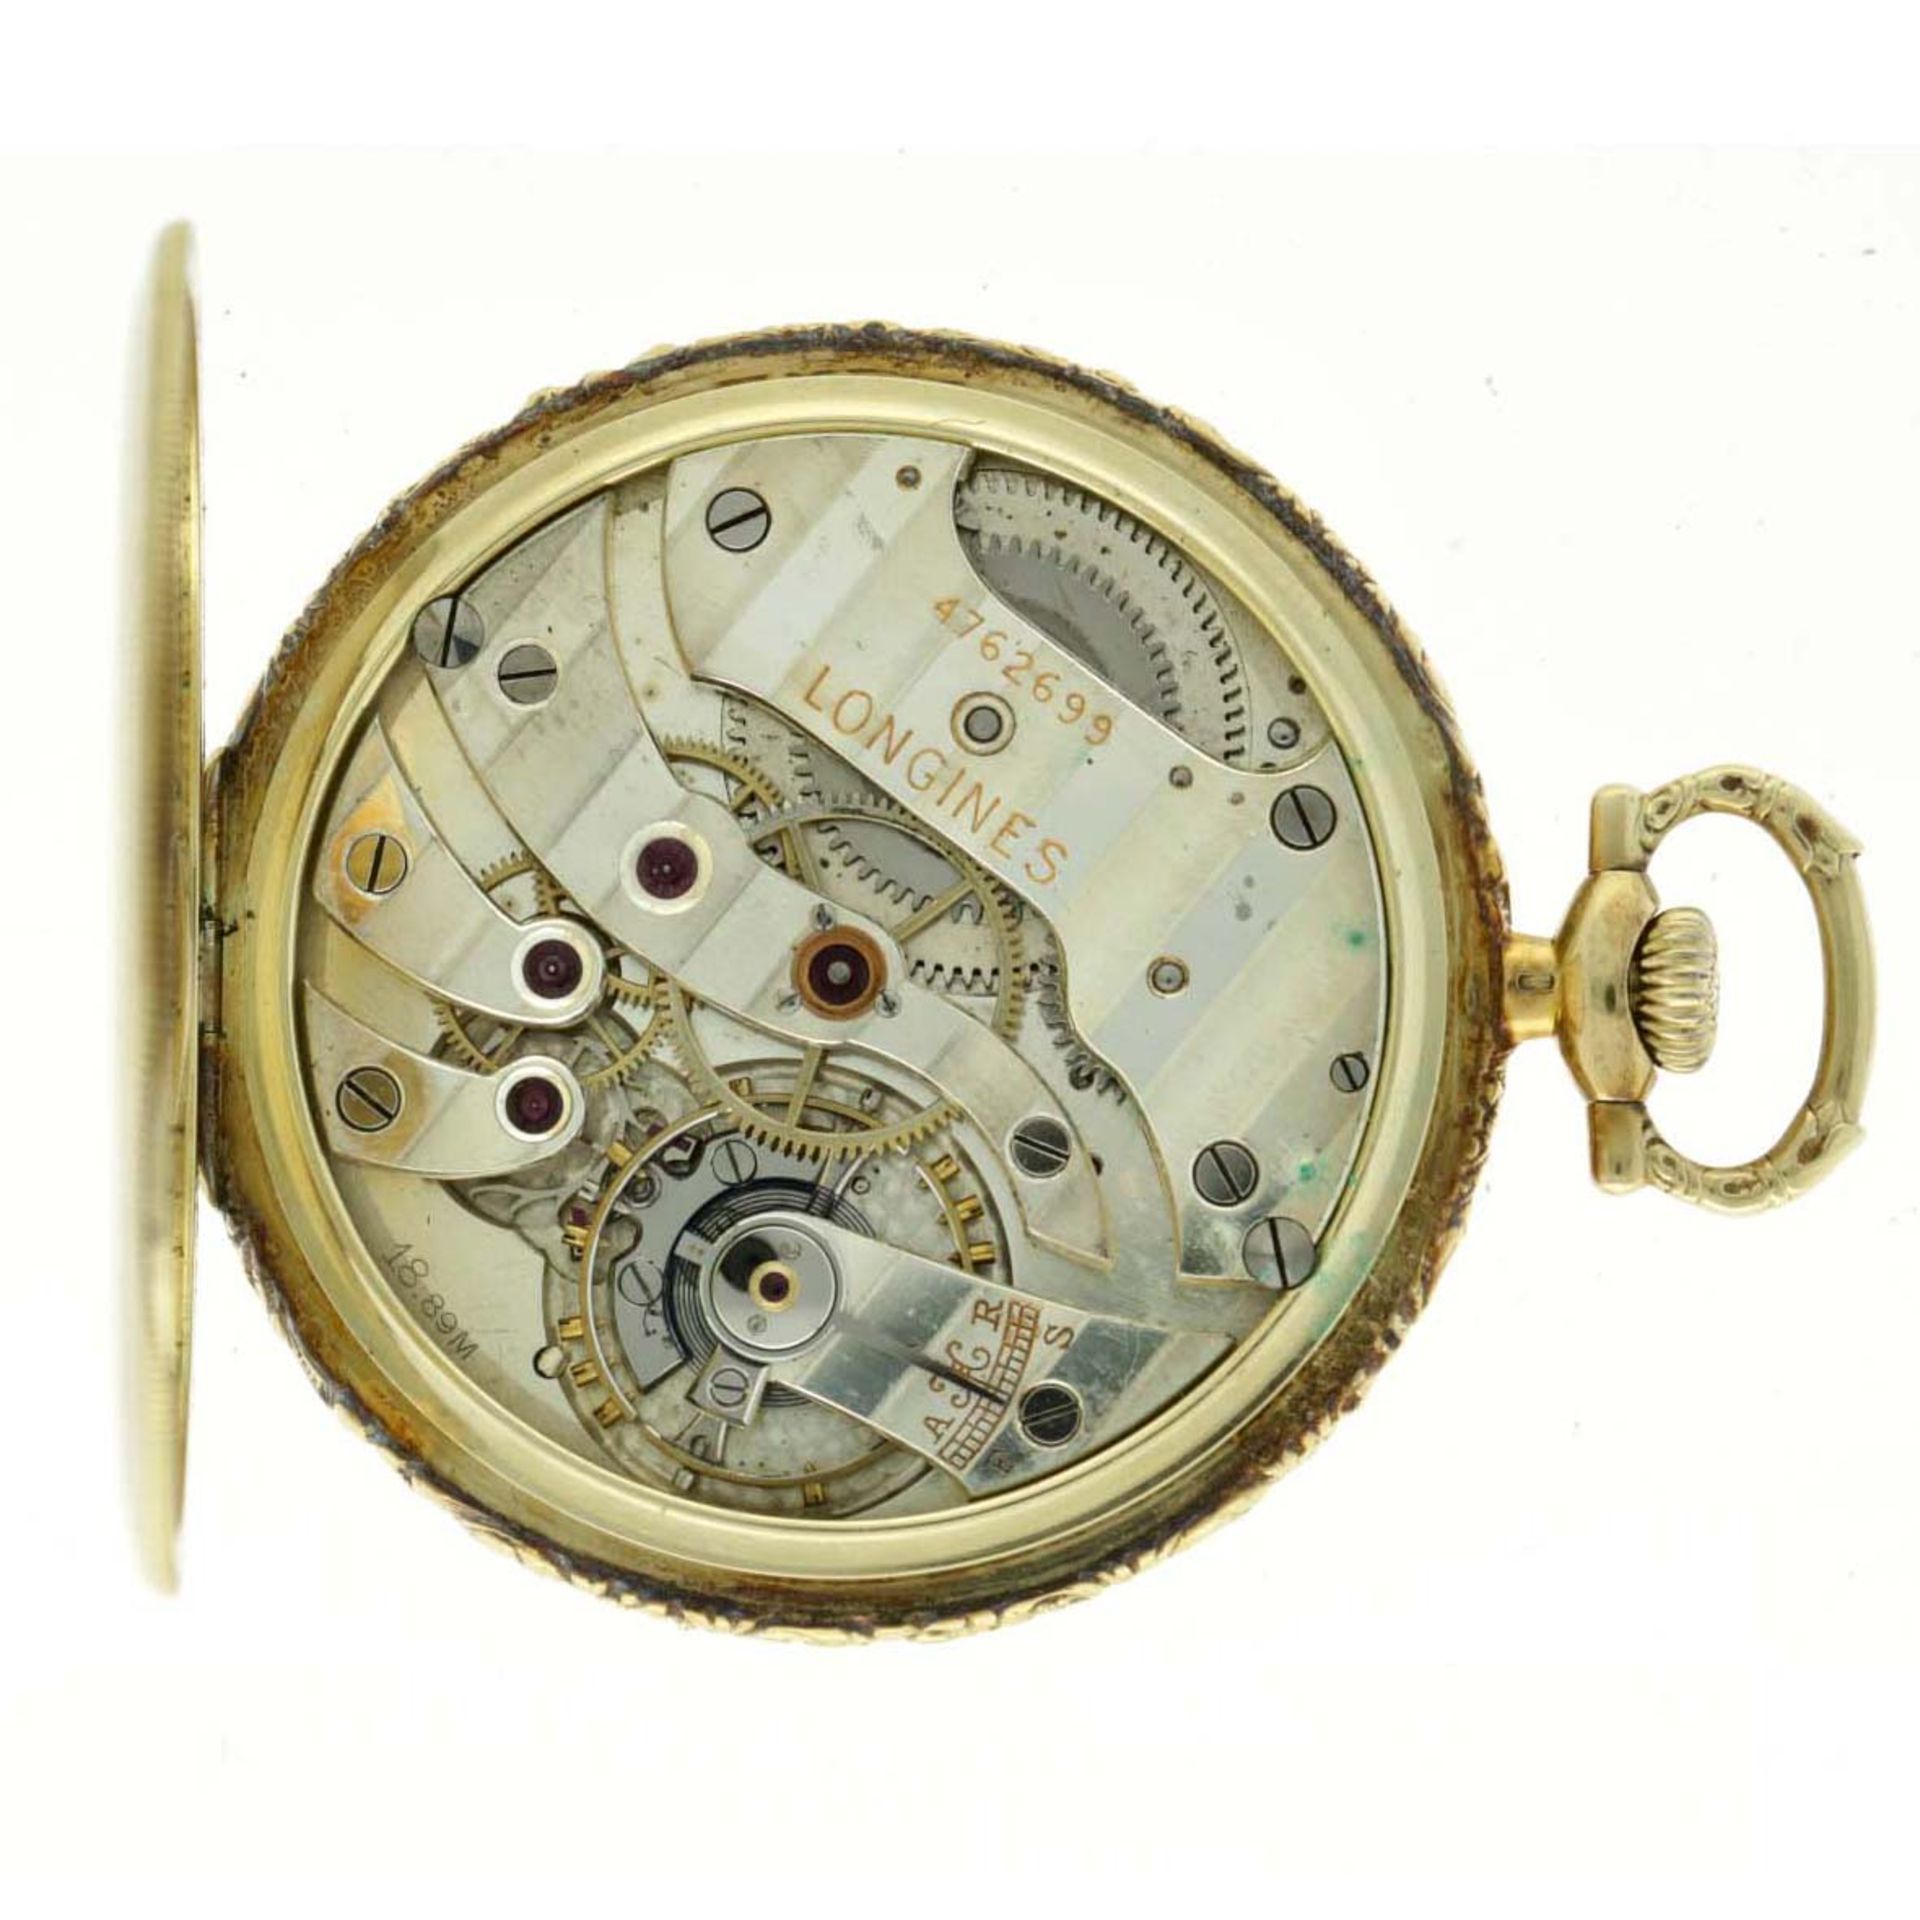 No Reserve - 14K Longines Vintage 14K. yellow gold pocket watch 4762699 - Men's pocket watch. - Image 3 of 4